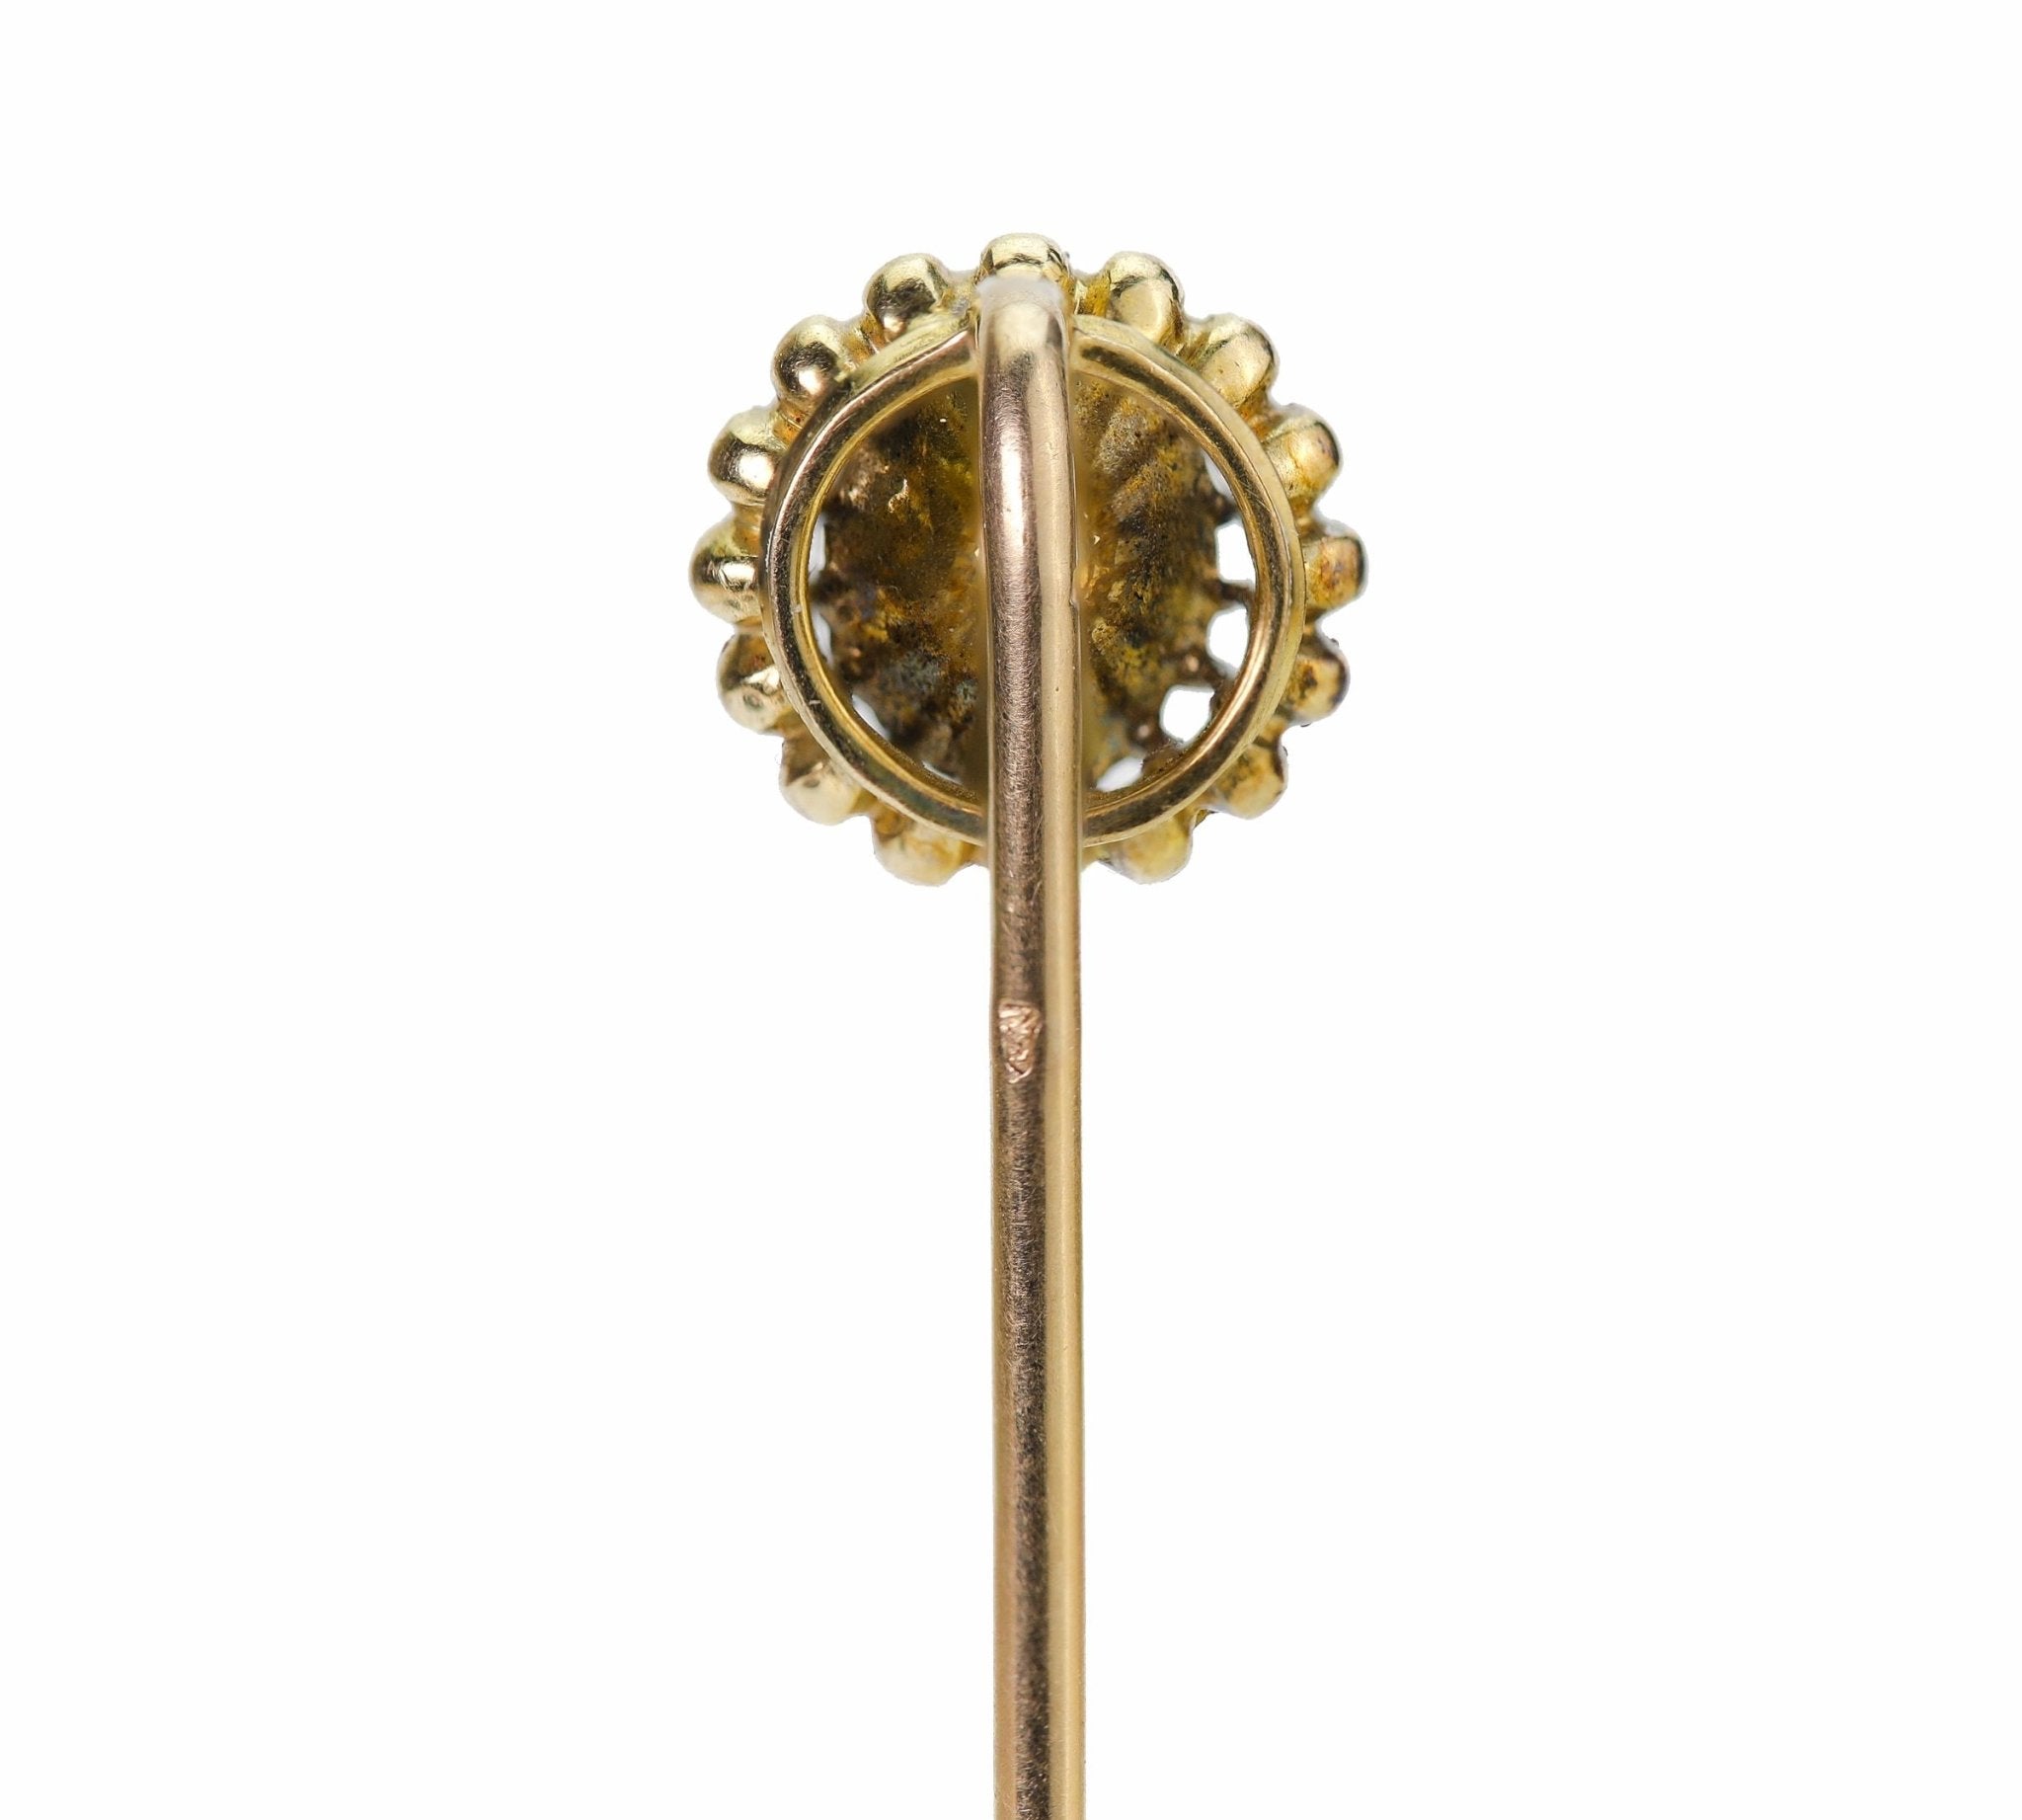 Antique French Gold Rose Cut Diamond Stick Pin